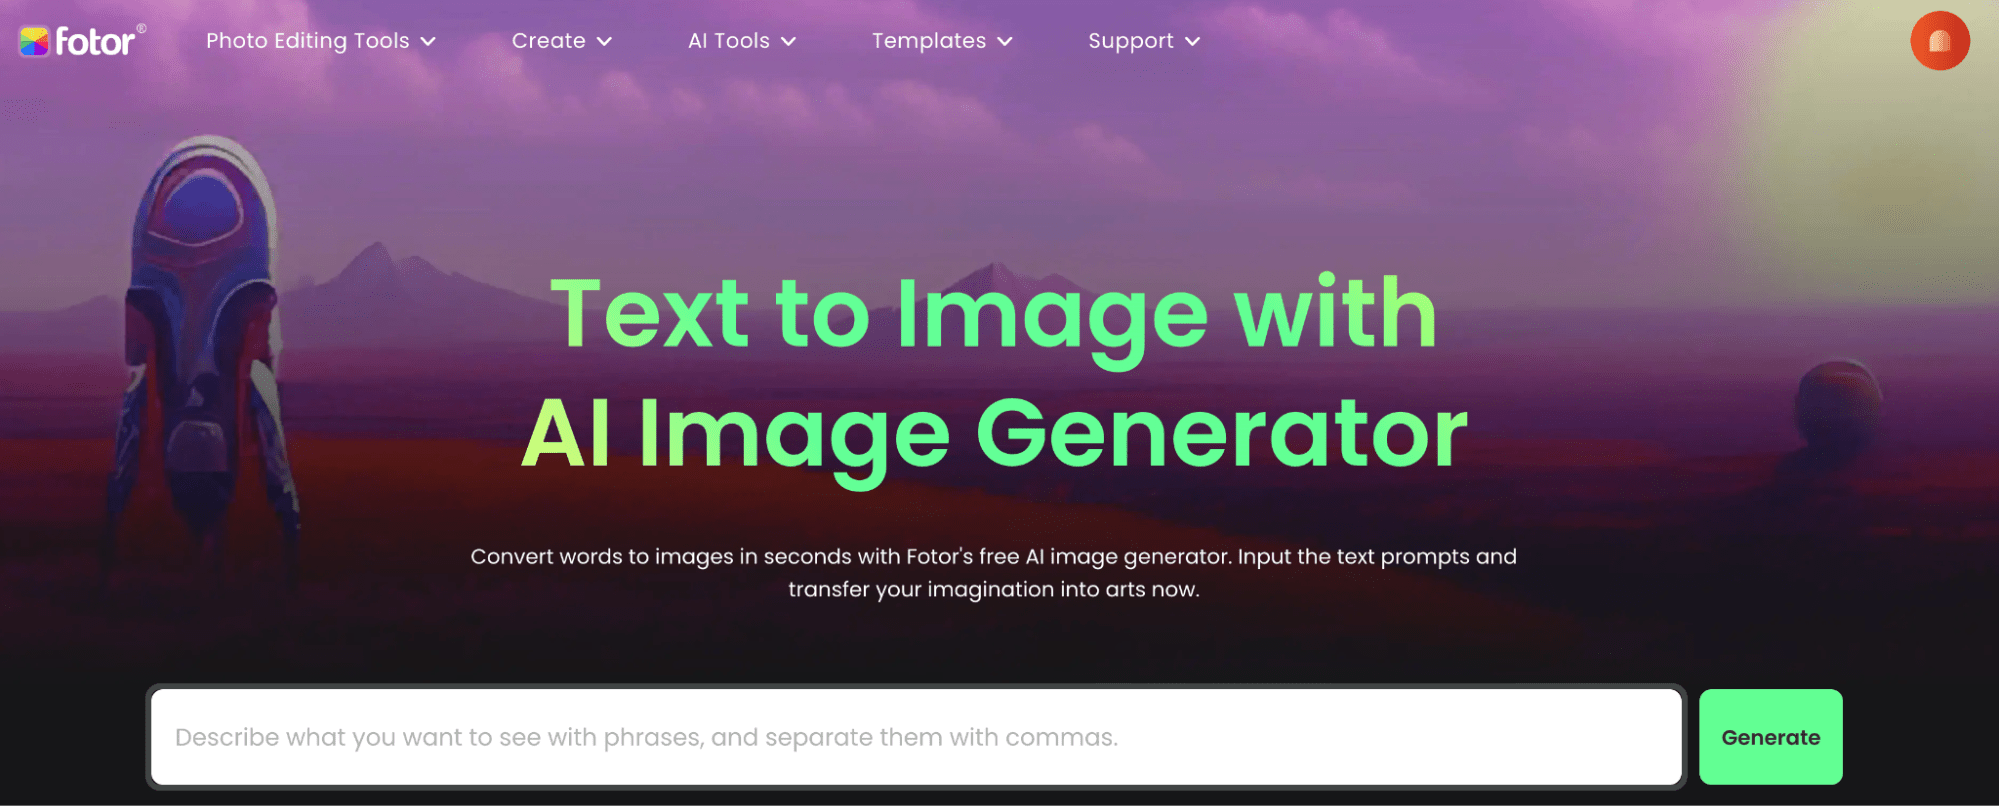 Fotor's AI image generator